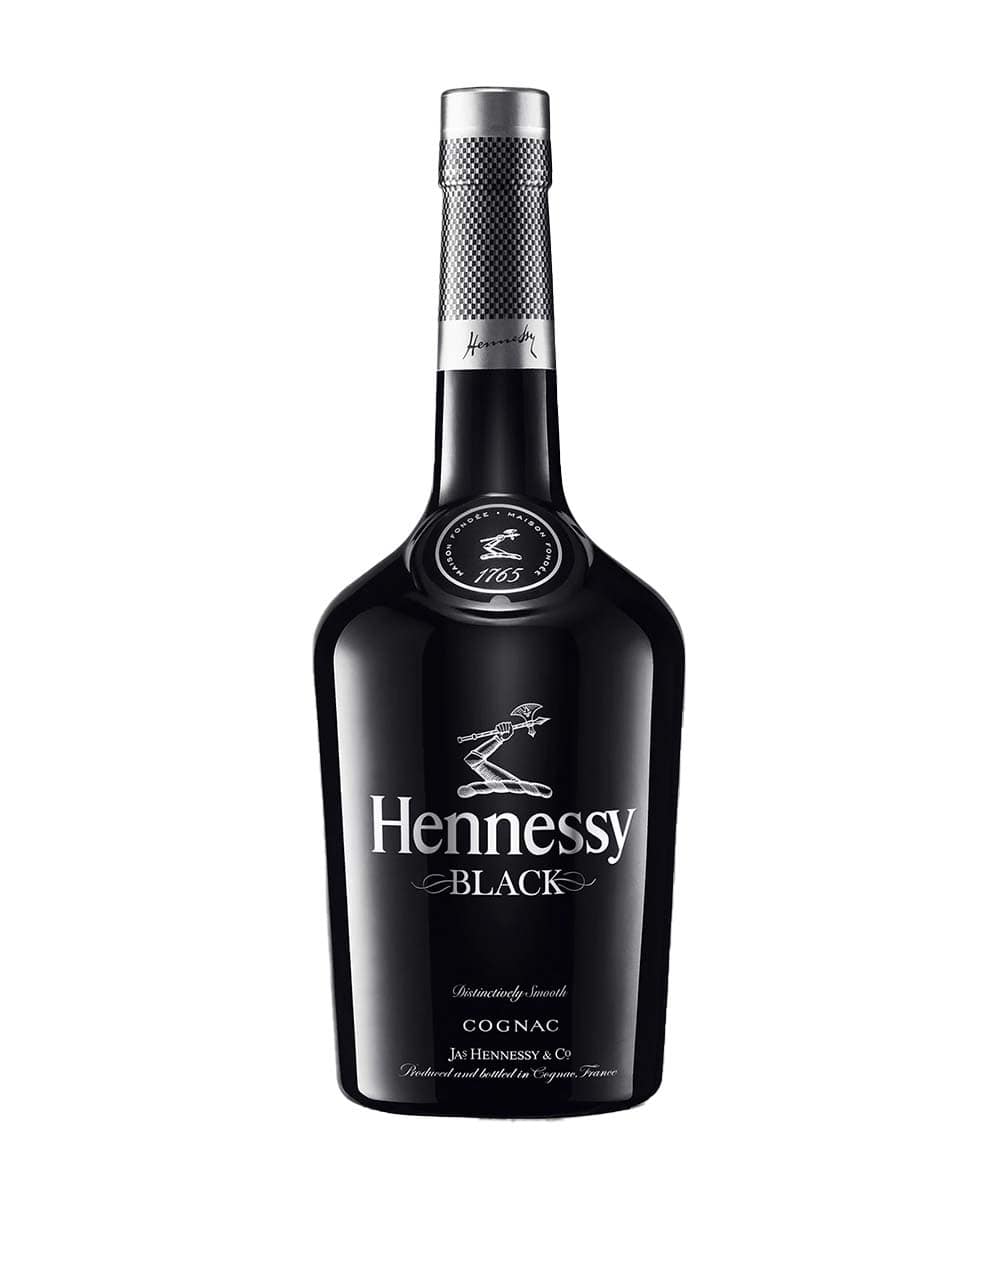 Hennessy XO Cognac - 375 ml